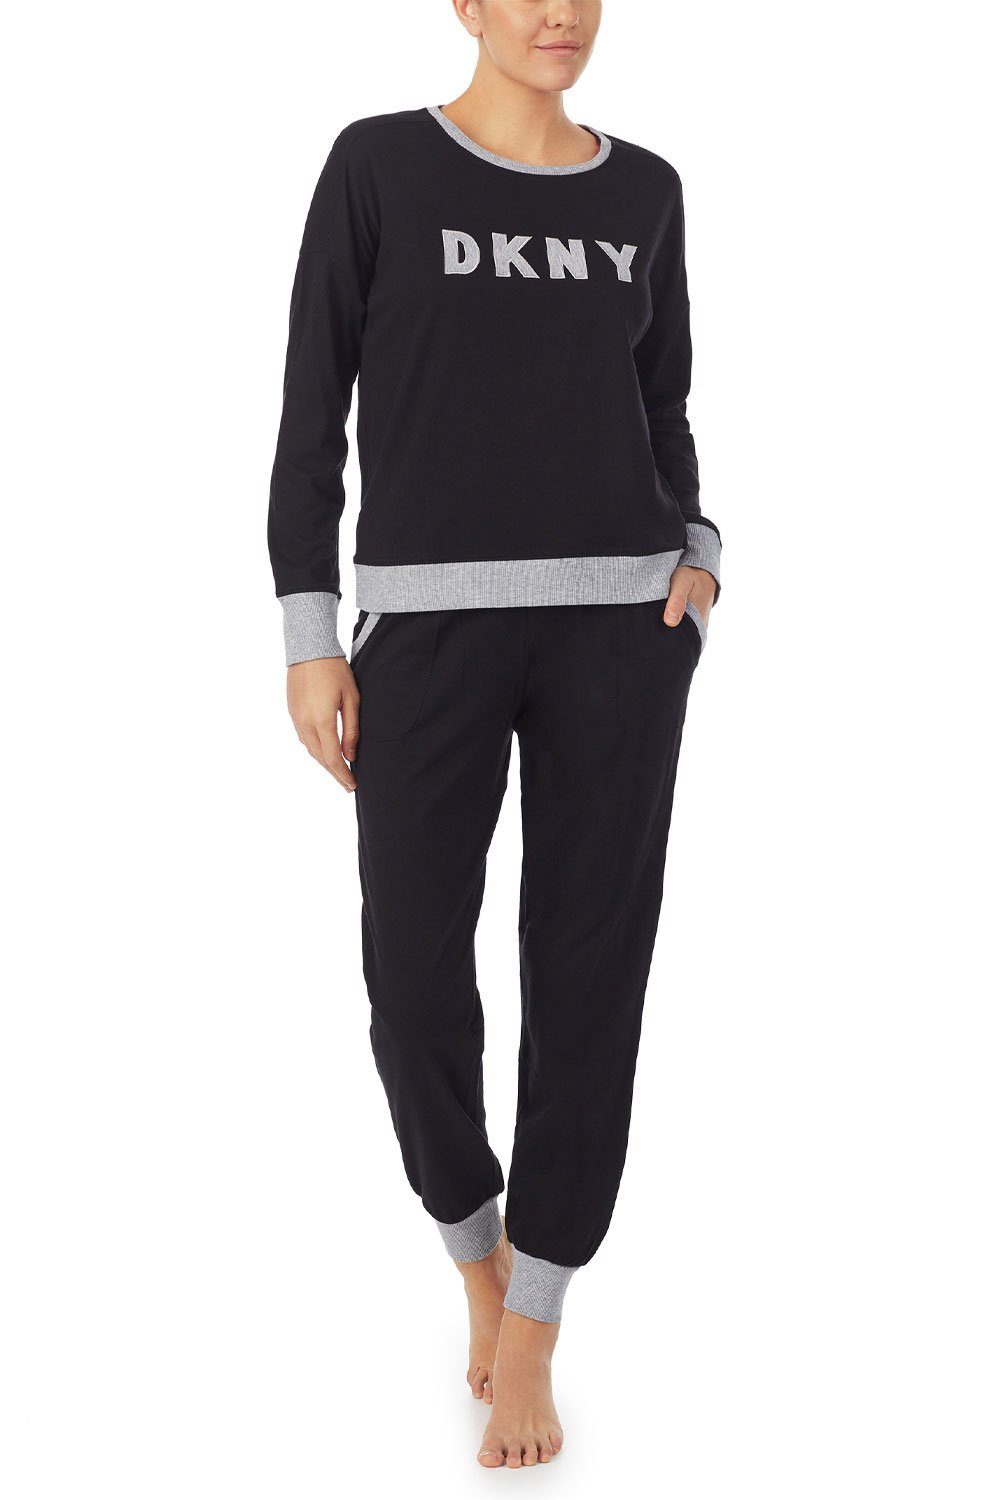 DKNY Pyjama Top & Jogger Set YI2919259 black